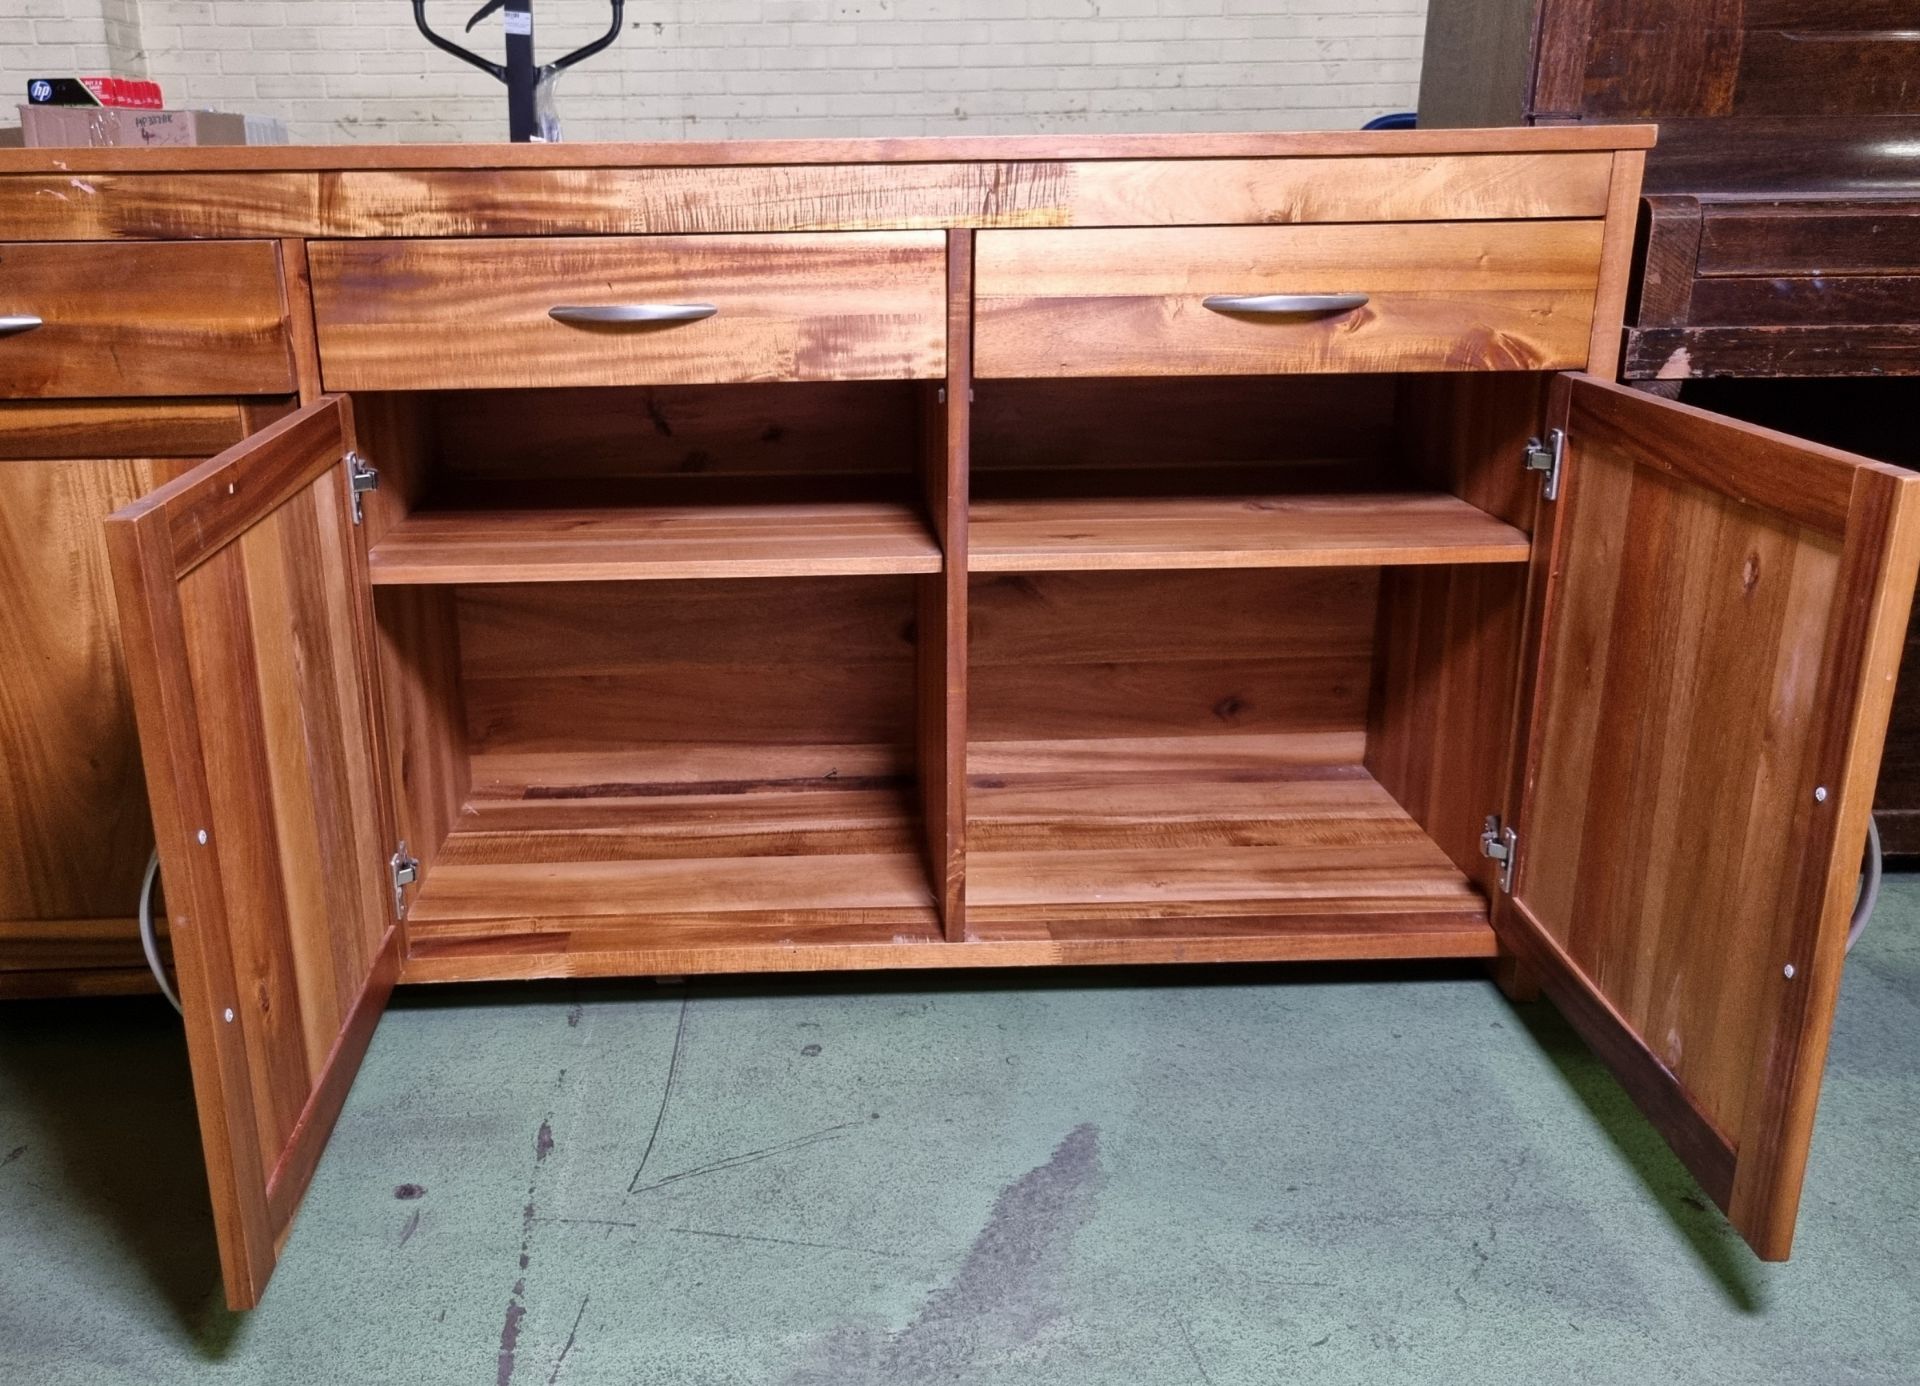 3 door 3 drawer wooden cabinet - W 1750 x D 500 x H 840mm - IN NEED OF REPAIR - Image 6 of 7